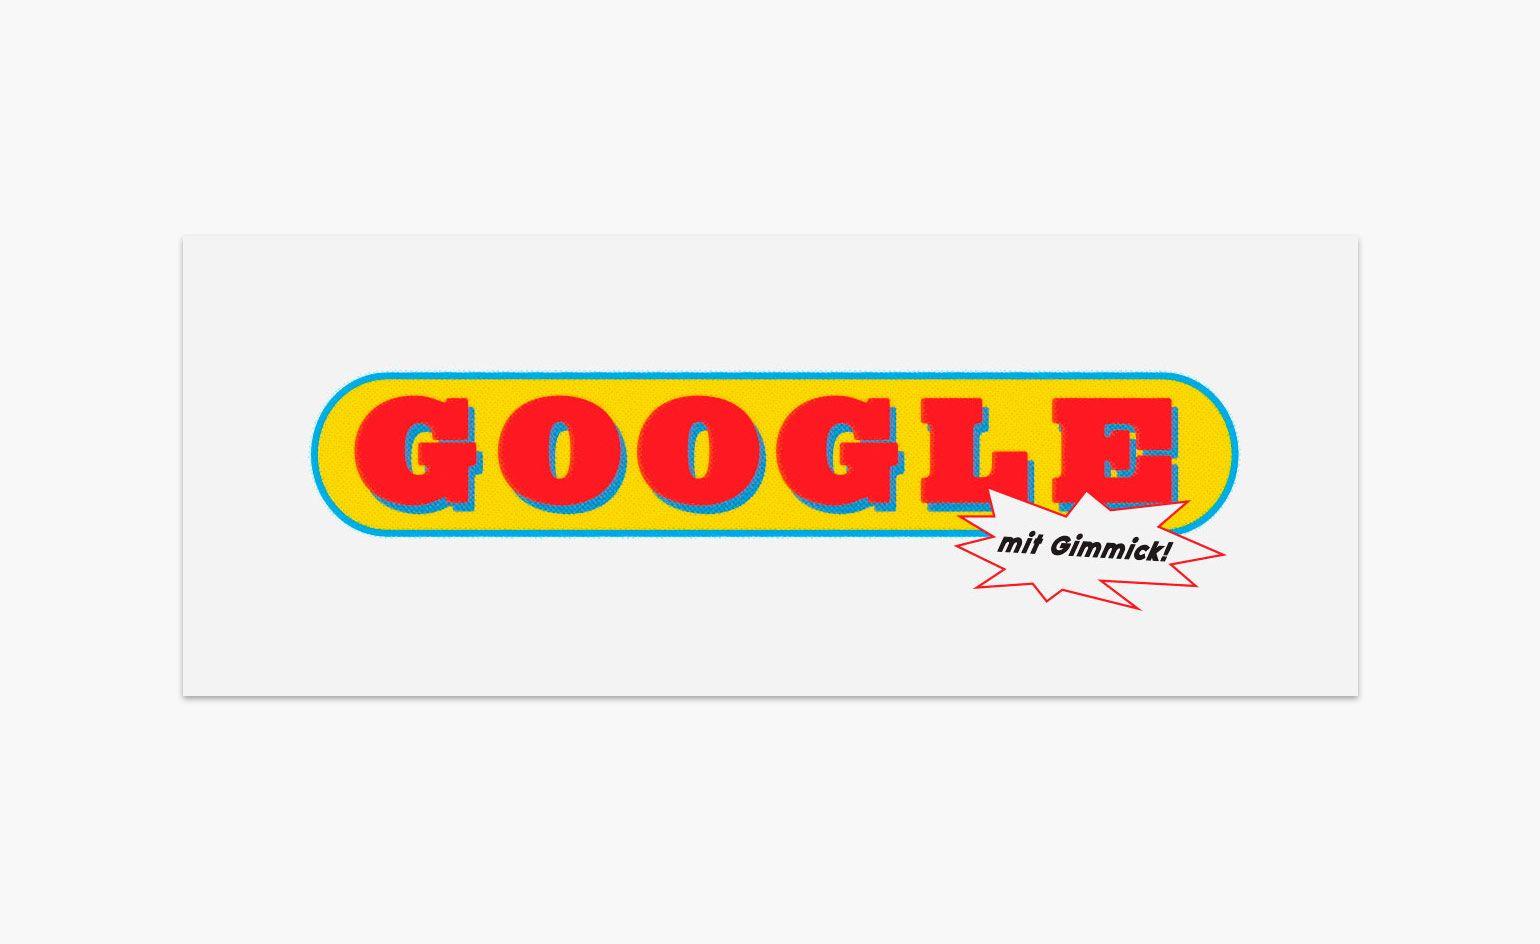 Google Doodle Logo - Top top 24 Google Doodles of all time | Wallpaper*